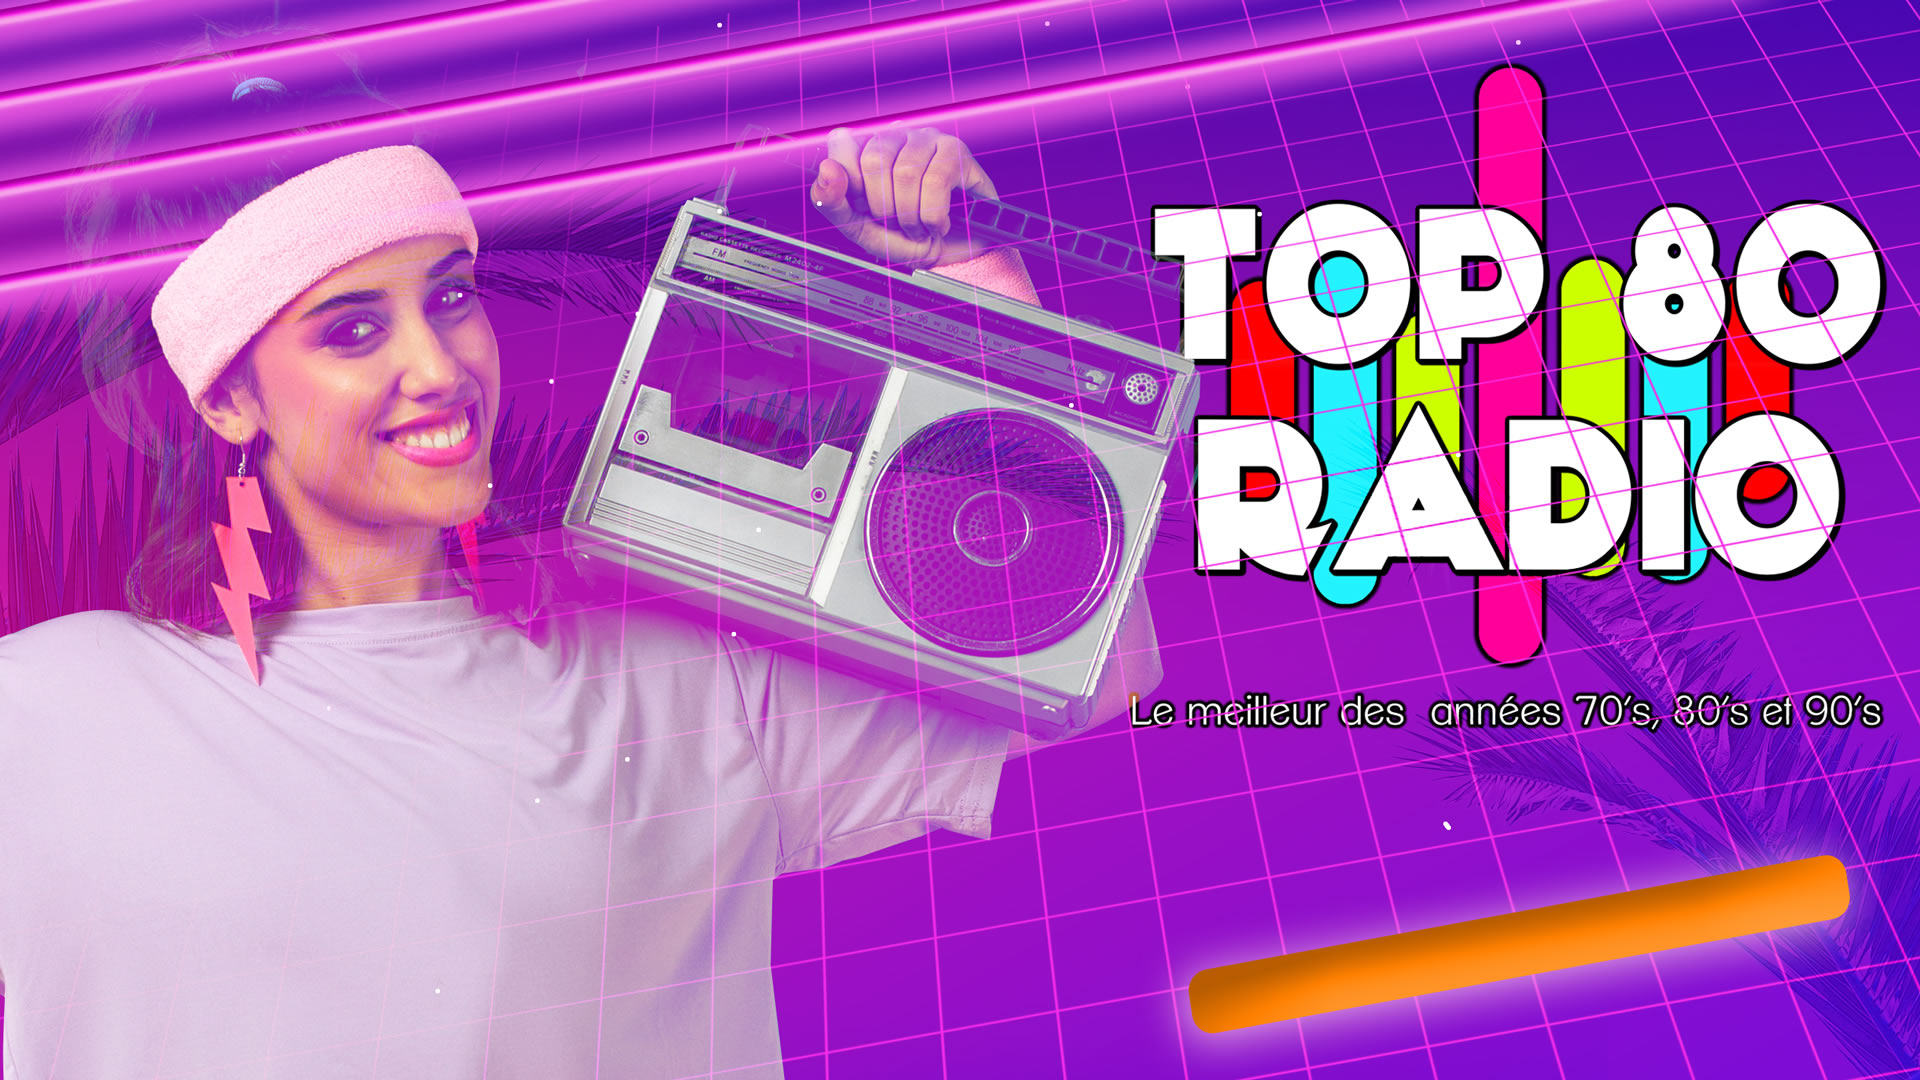 WALLPAPER–TOP-80-RADIO—64